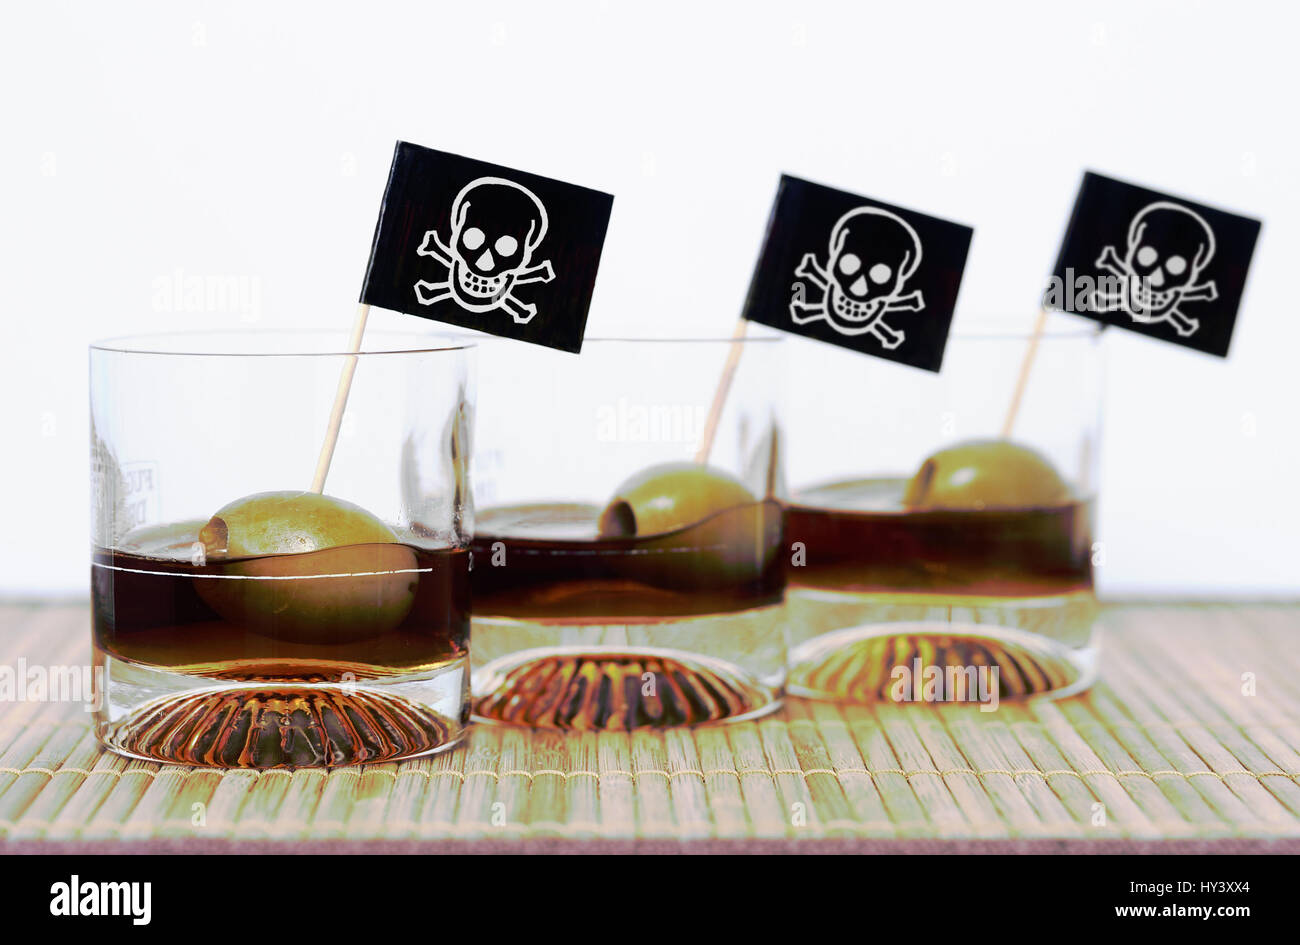 Three glasses with alcohol and death's-head flags, symbolic photo coma drinking, Drei Glaeser mit Alkohol und Totenkopf-Fahnen, Symbolfoto Komasaufen Stock Photo